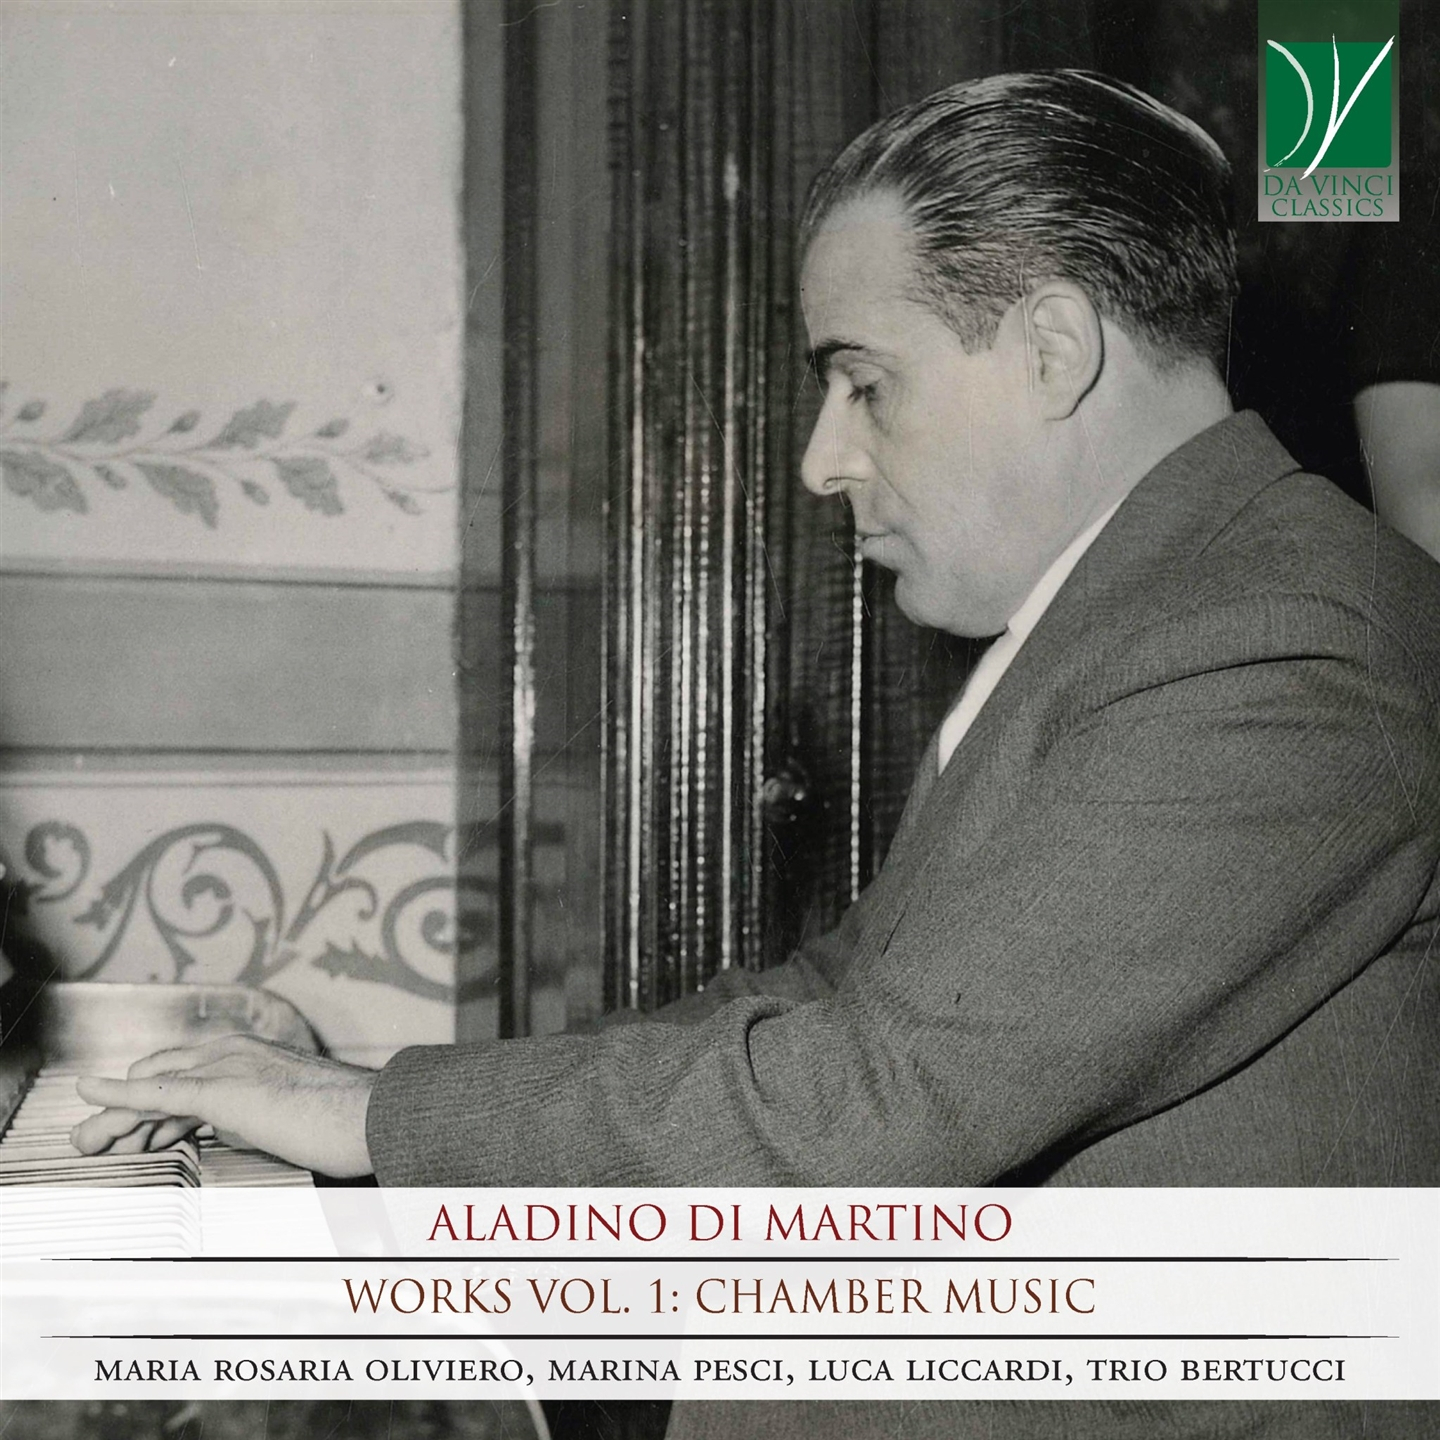 DI MARTINO: WORKS VOL. 1 - CHAMBER MUSIC